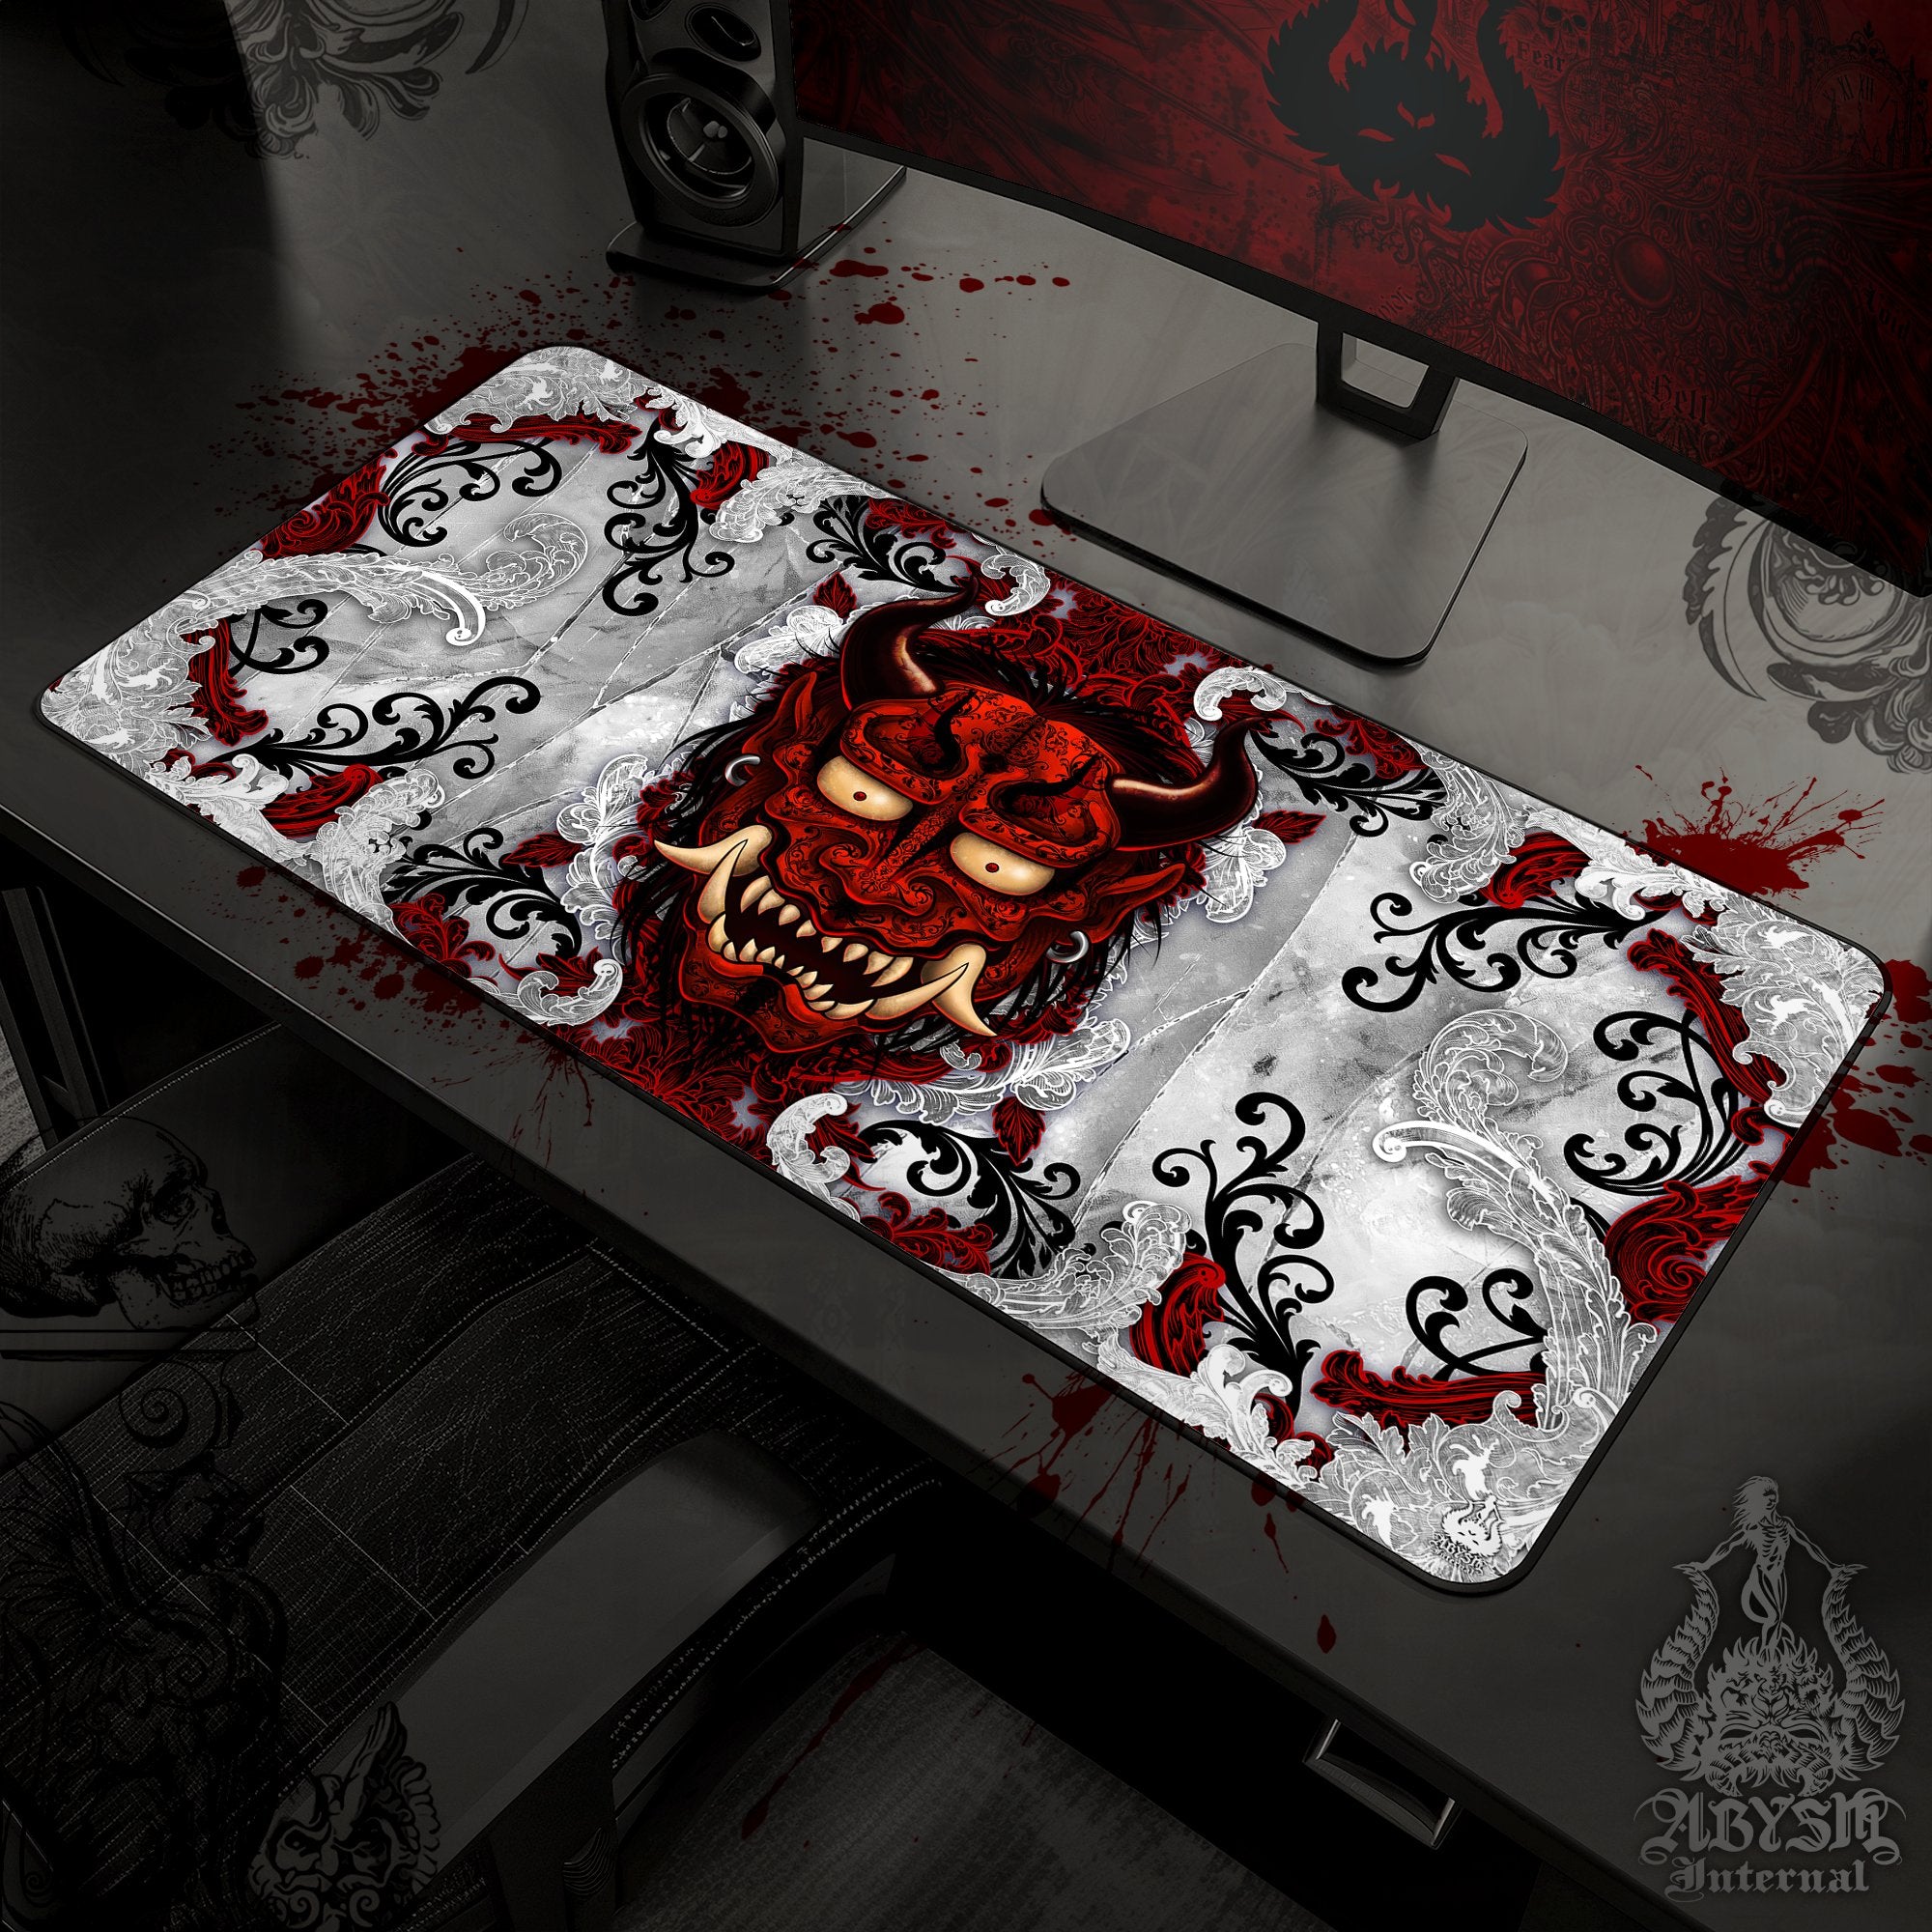 Japanese Demon Mouse Pad, Oni Gaming Desk Mat, Bloody White Goth Workpad, Manga Yokai Table Protector Cover, Art Print - Abysm Internal